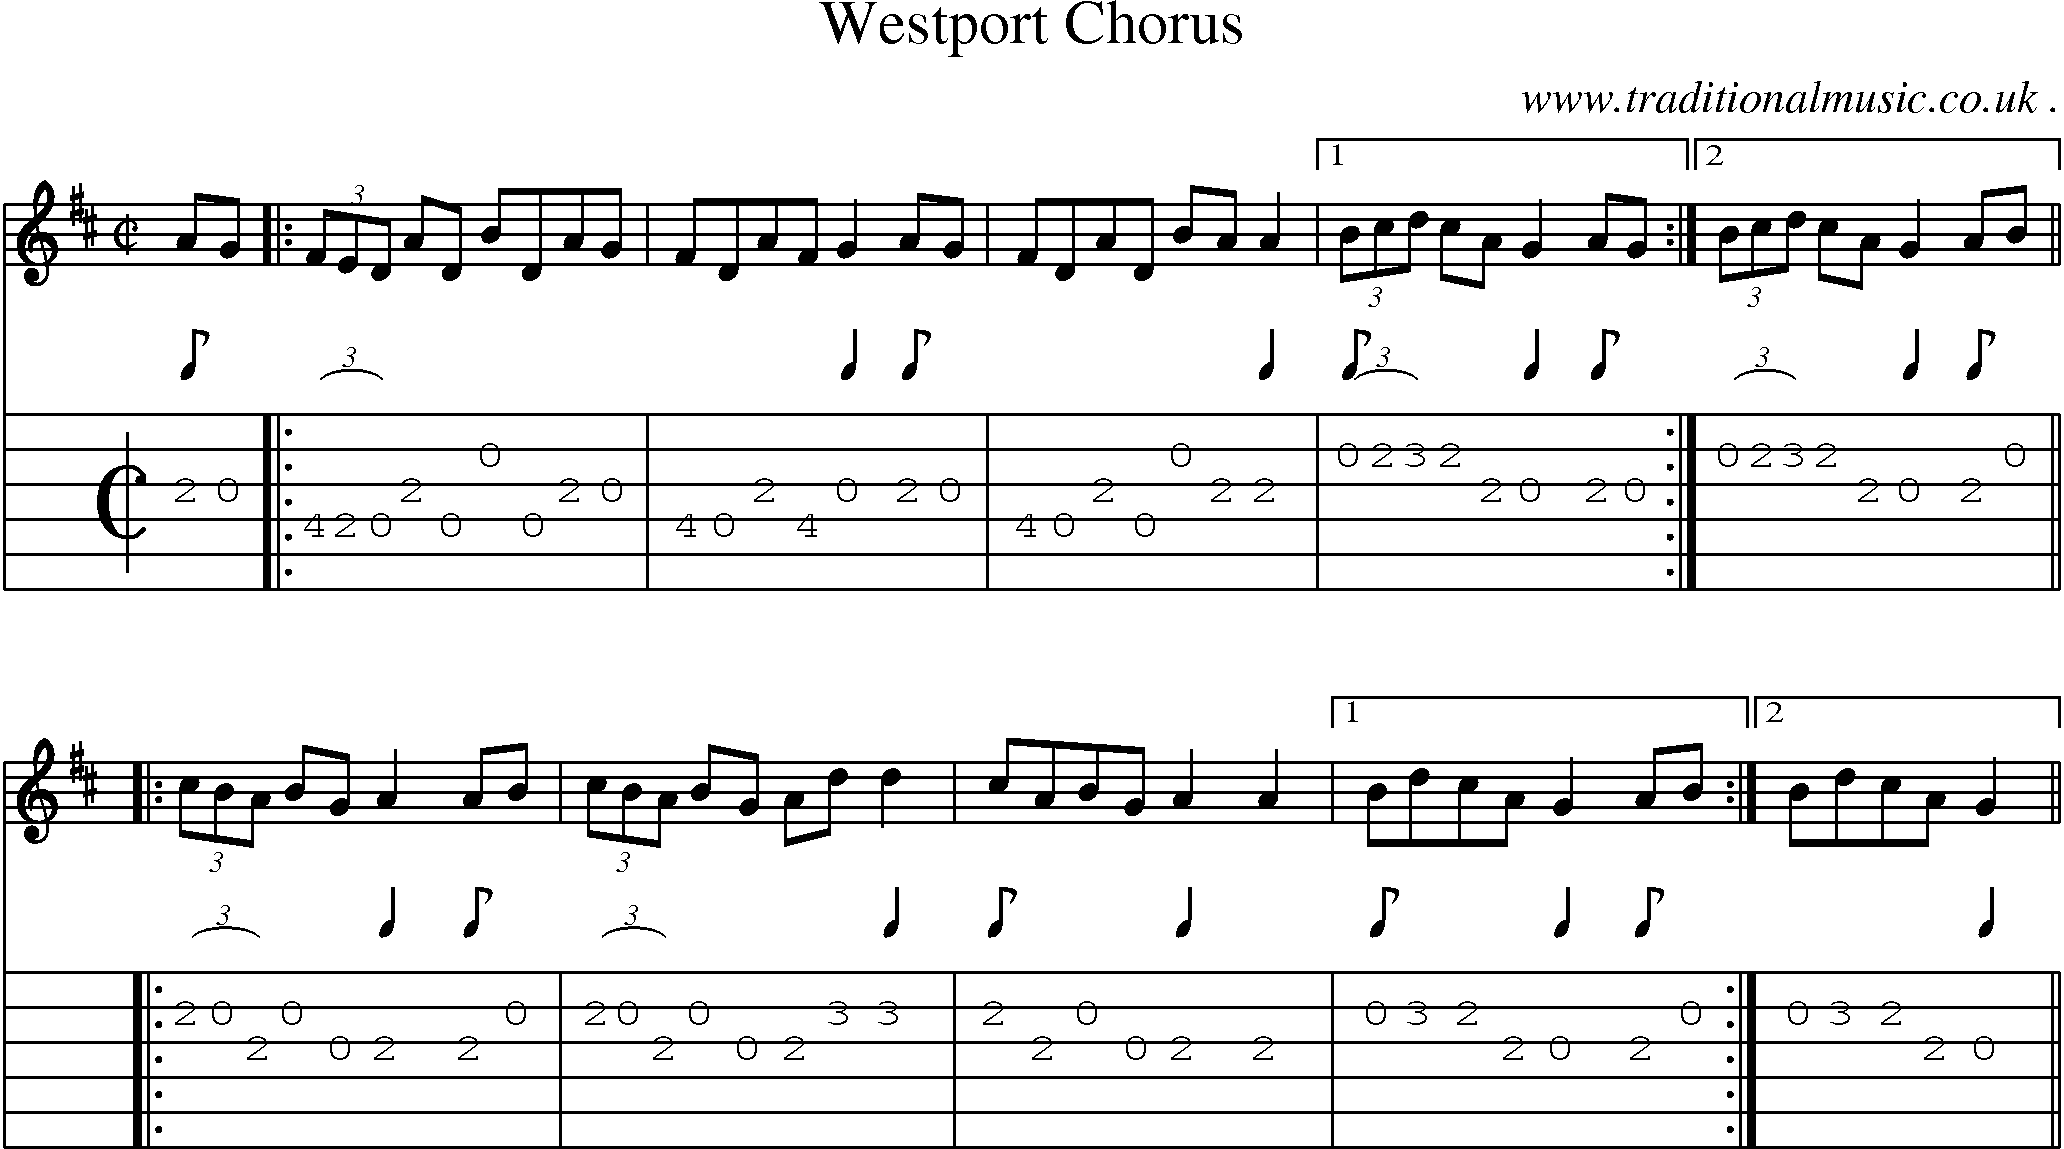 Sheet-Music and Guitar Tabs for Westport Chorus